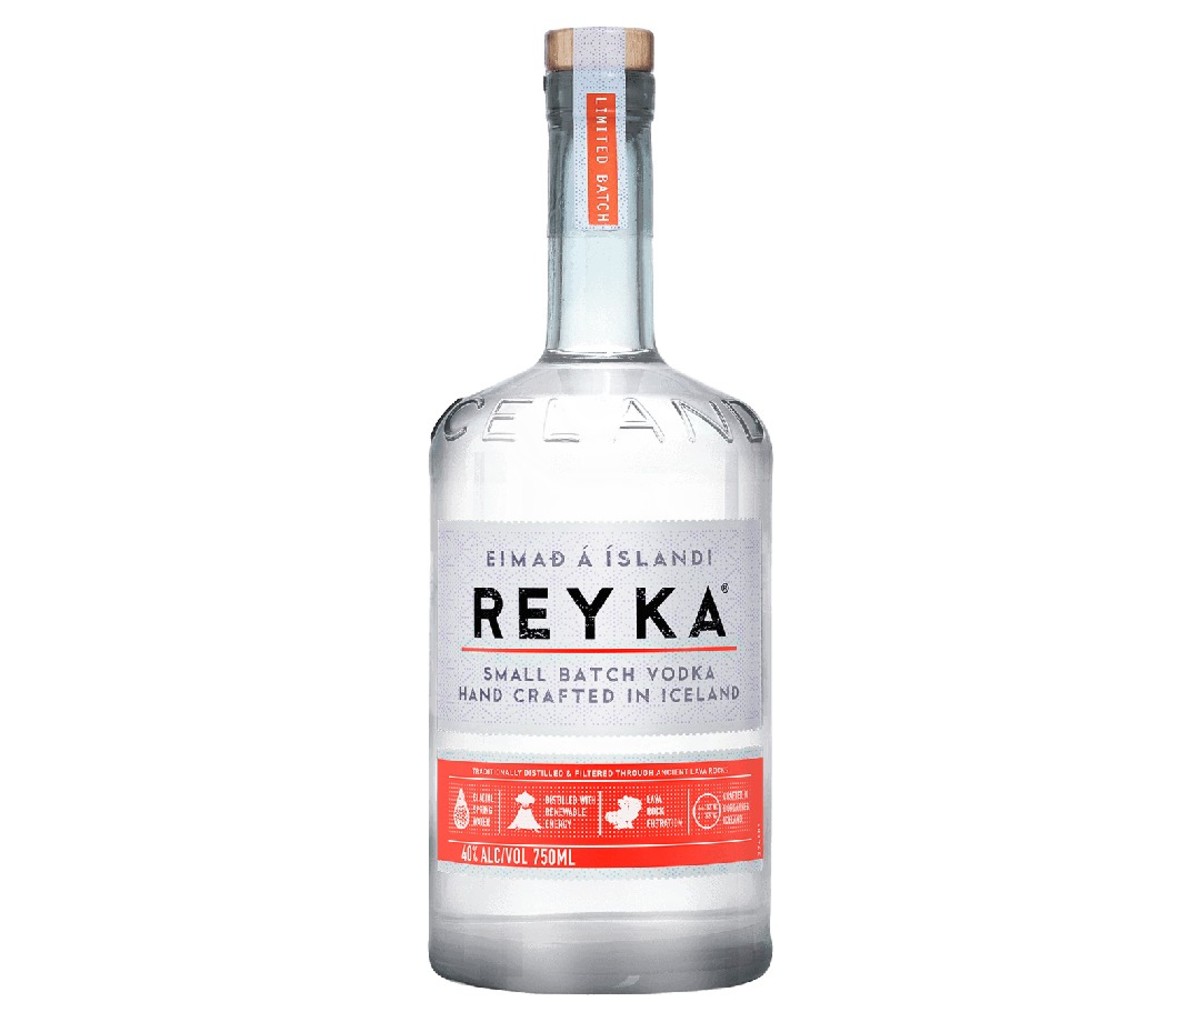 A bottle of Reyka vodka